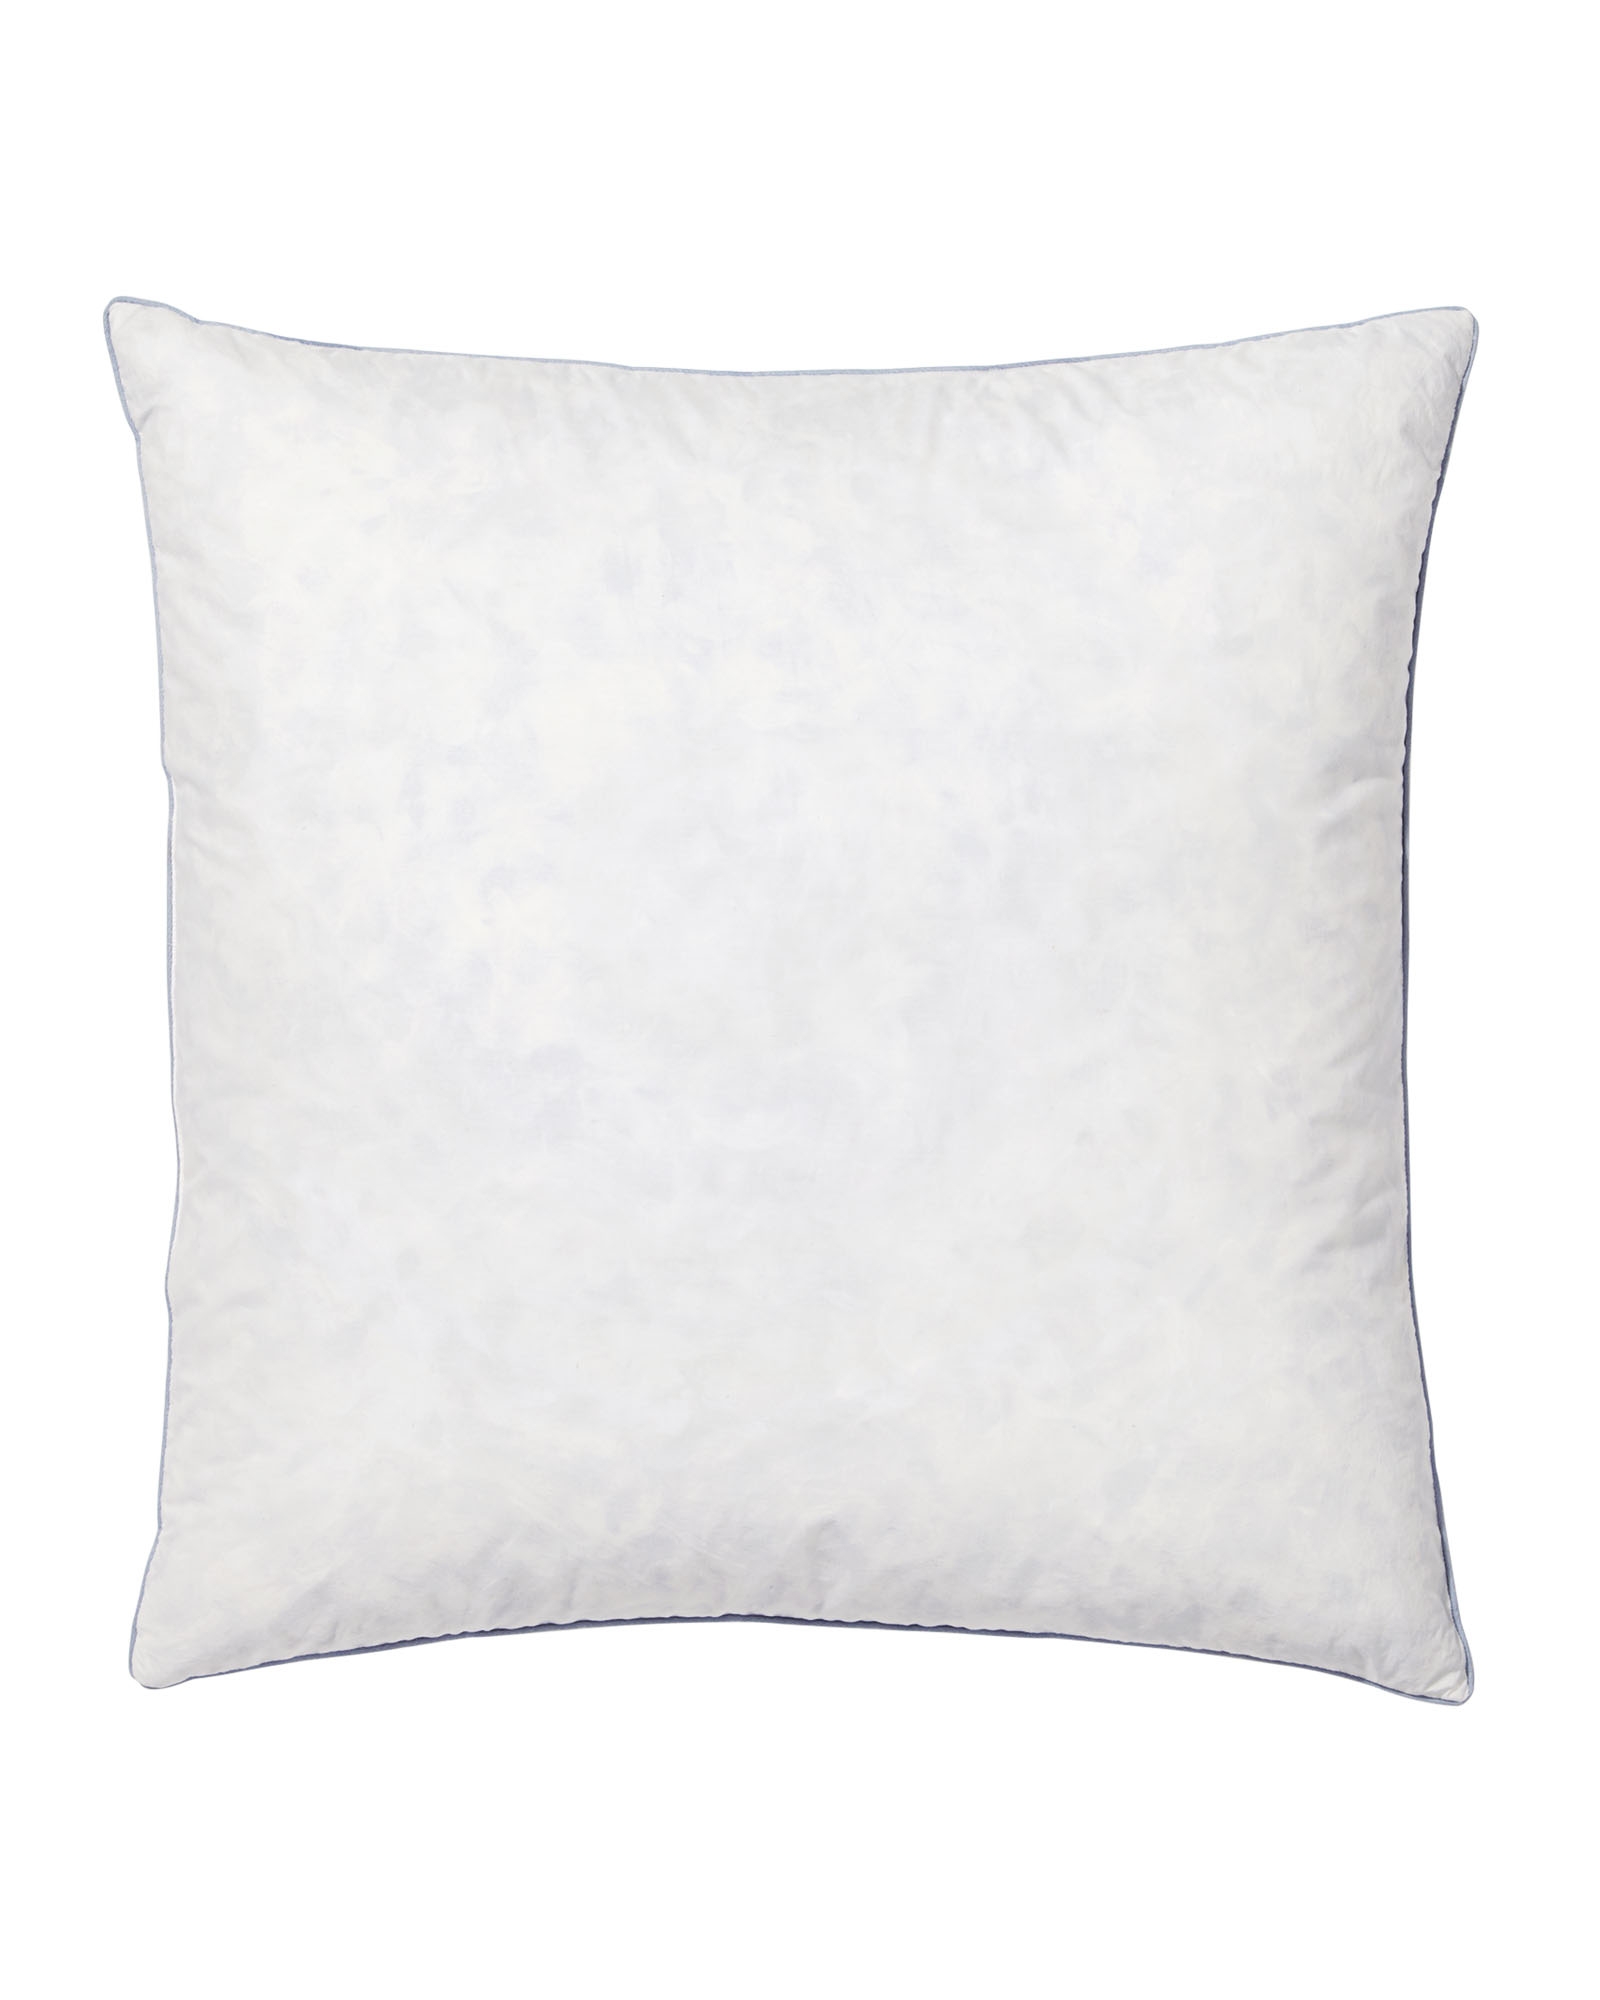 Outdoor Pillow Insert - Image 0